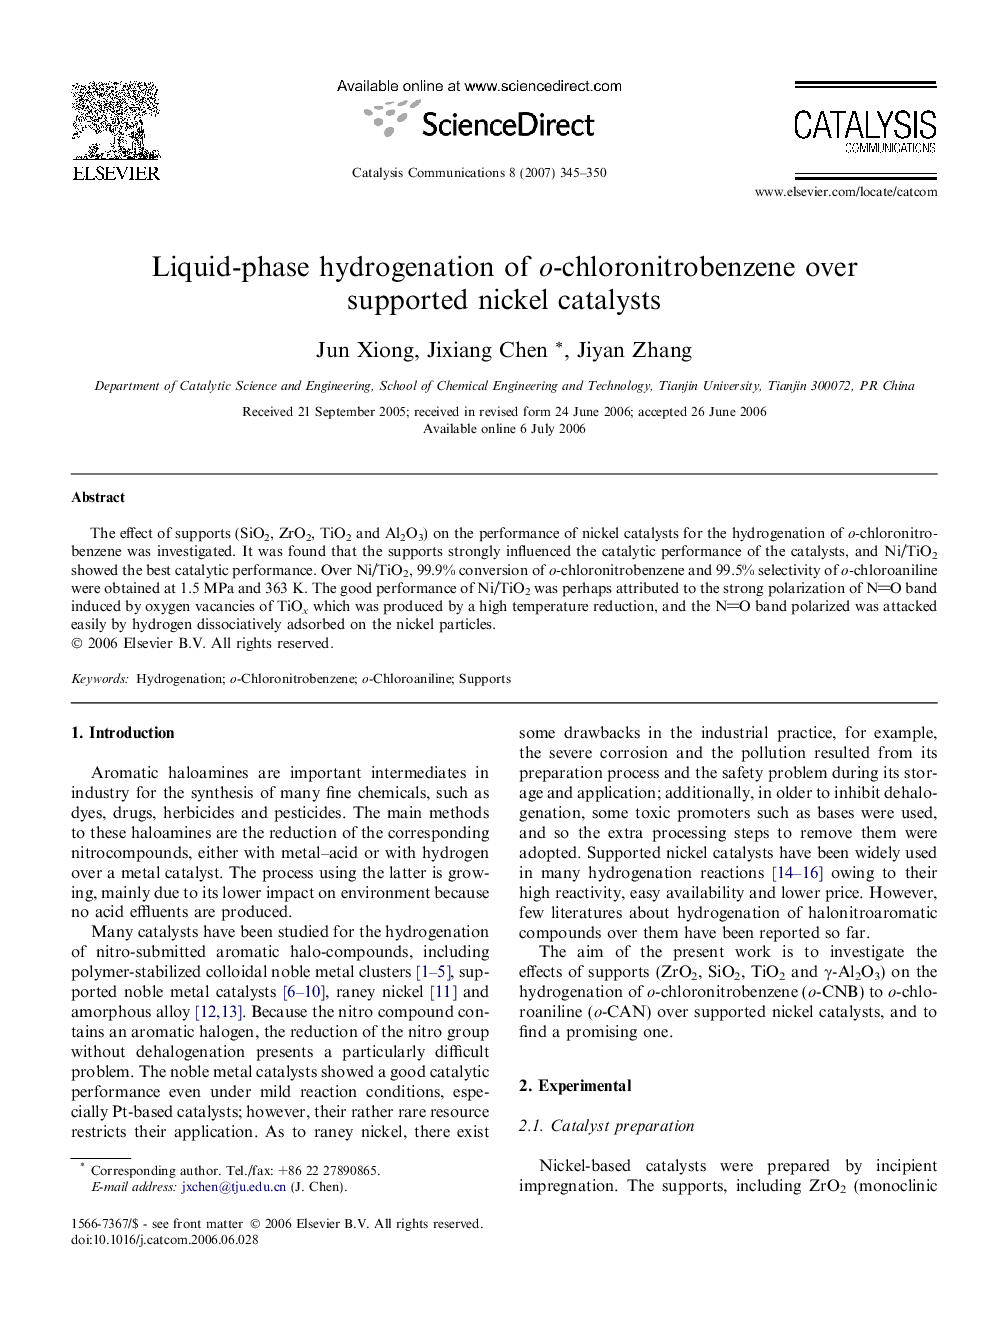 Liquid-phase hydrogenation of o-chloronitrobenzene over supported nickel catalysts